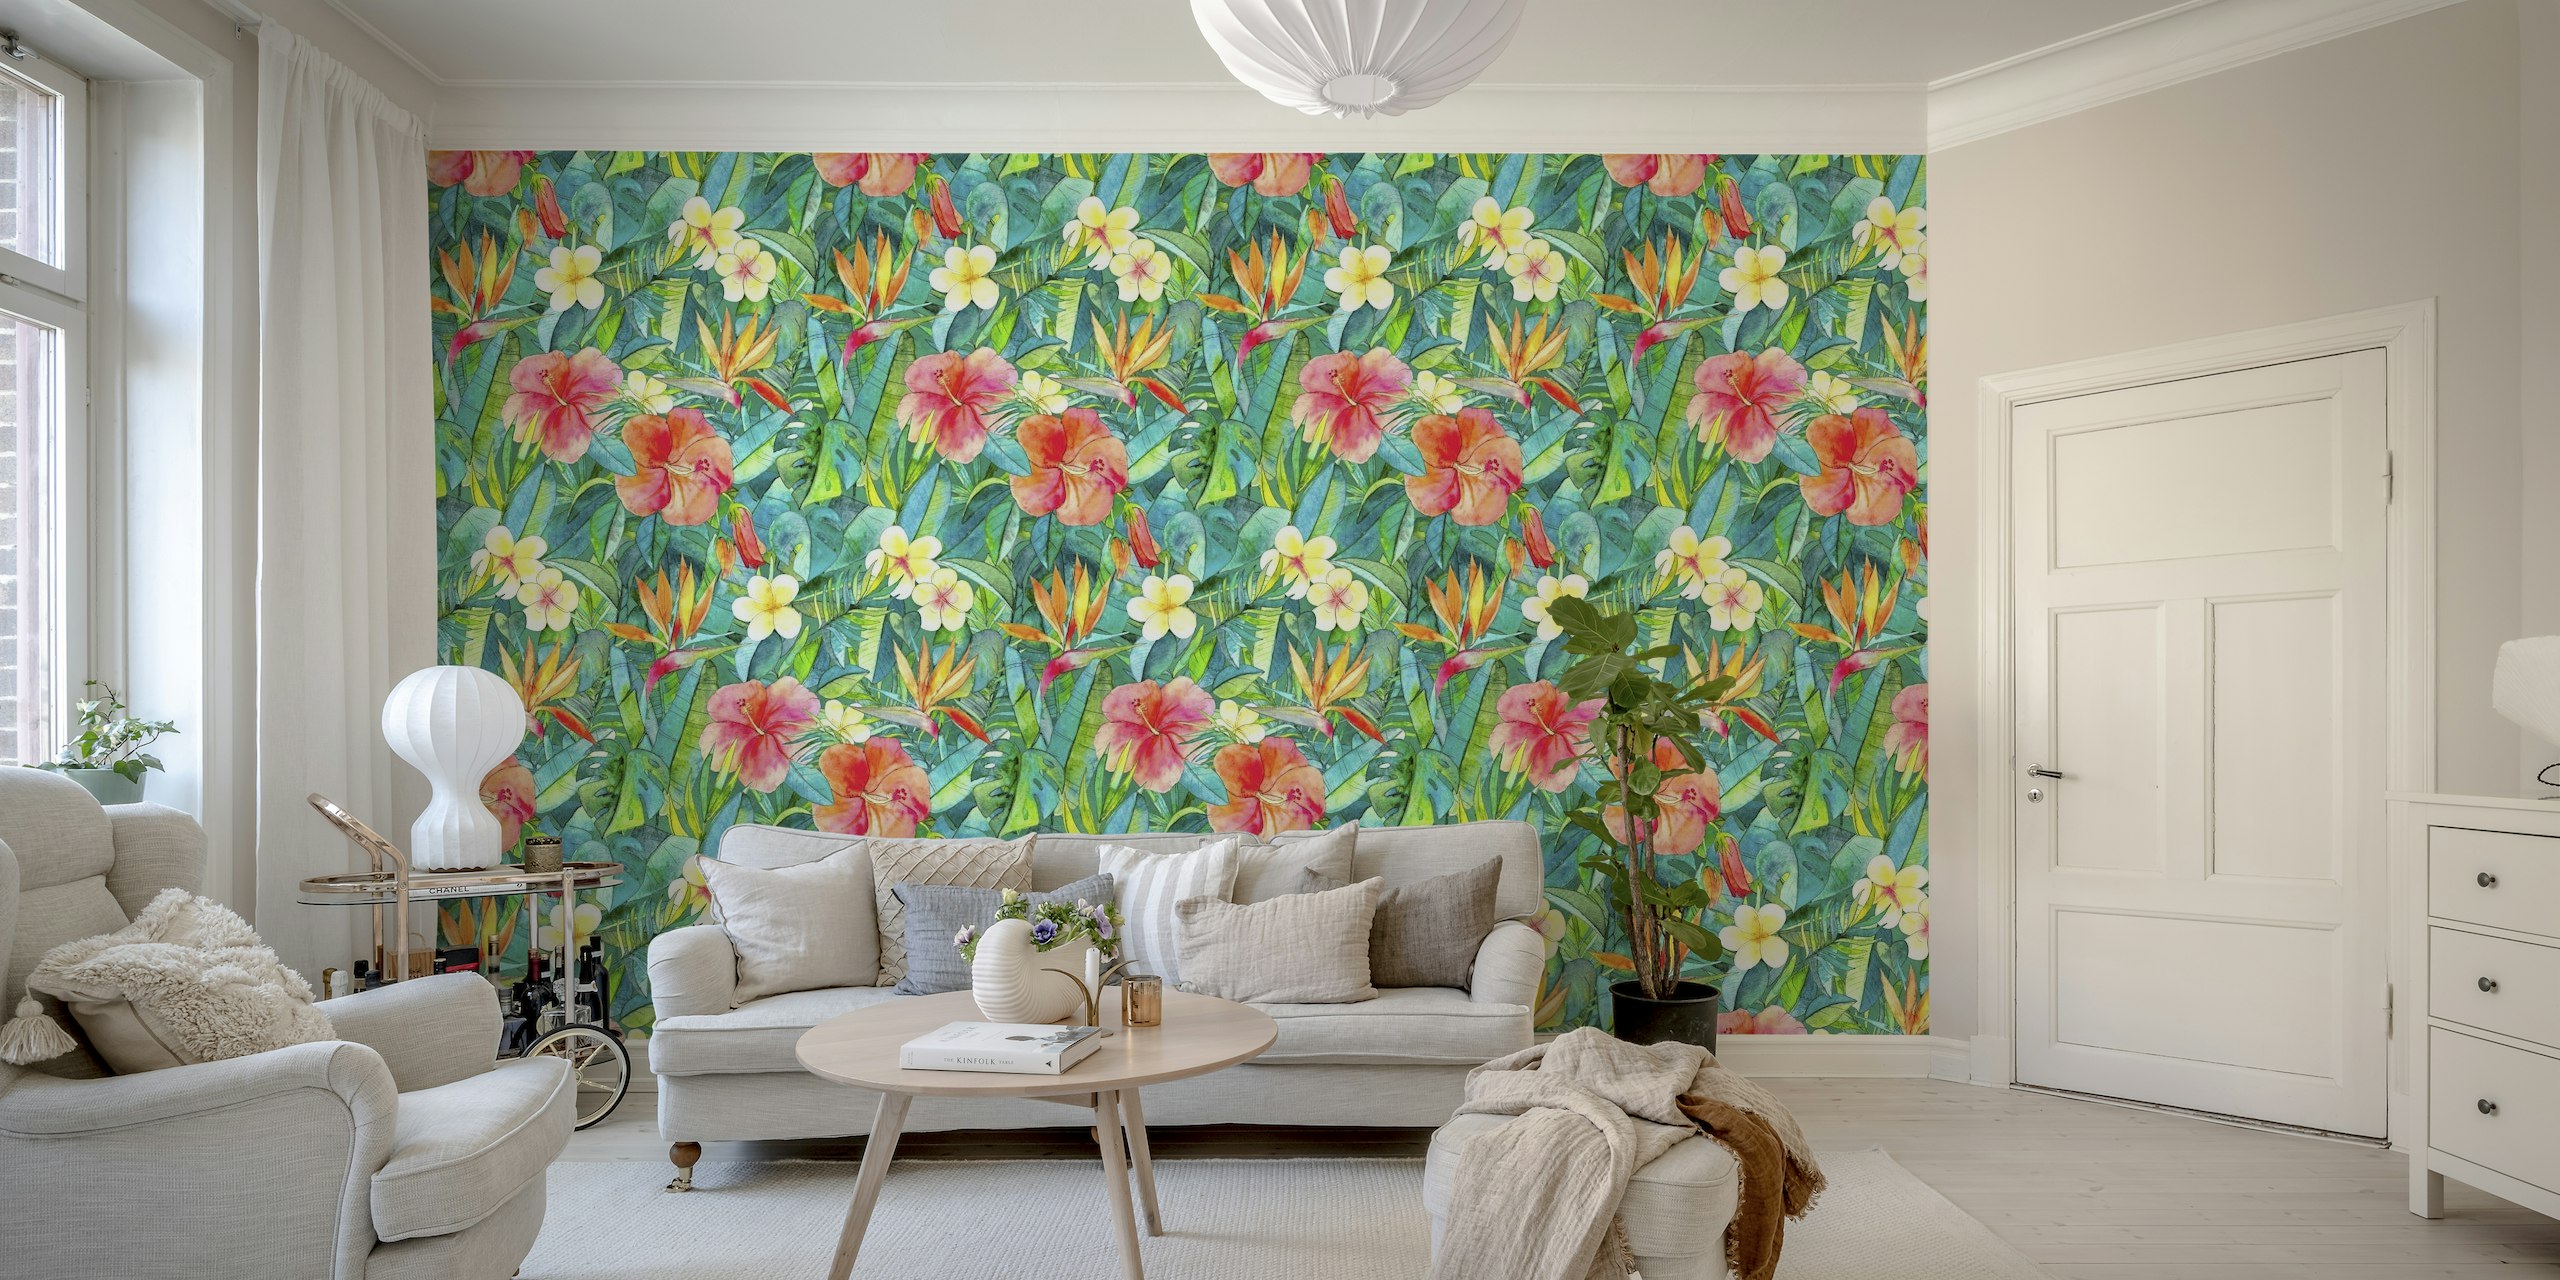 Classic Tropical Garden in Watercolors wallpaper